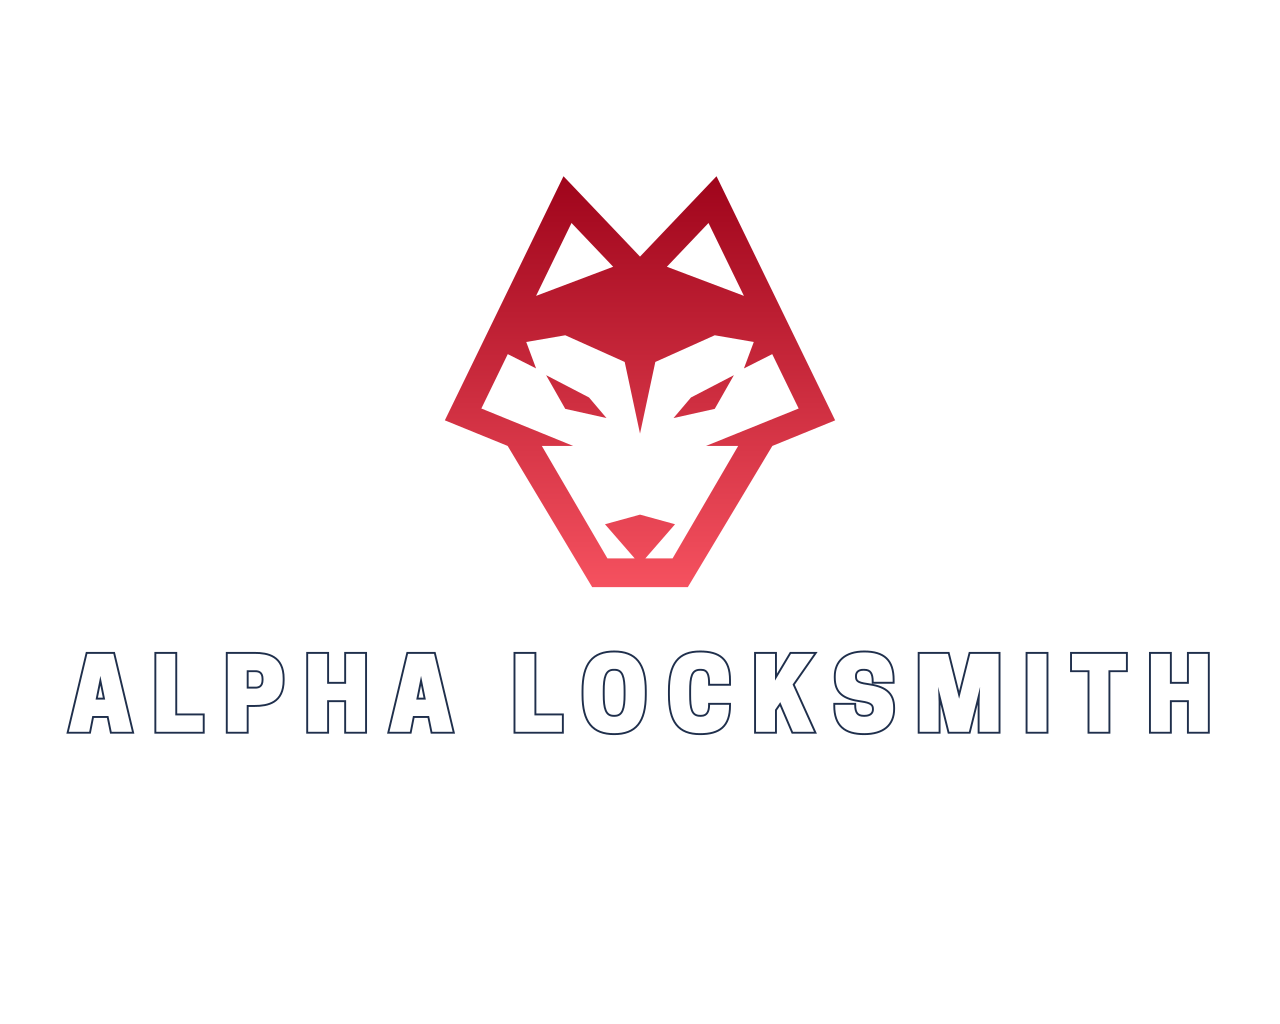 Alphalocksmith NC